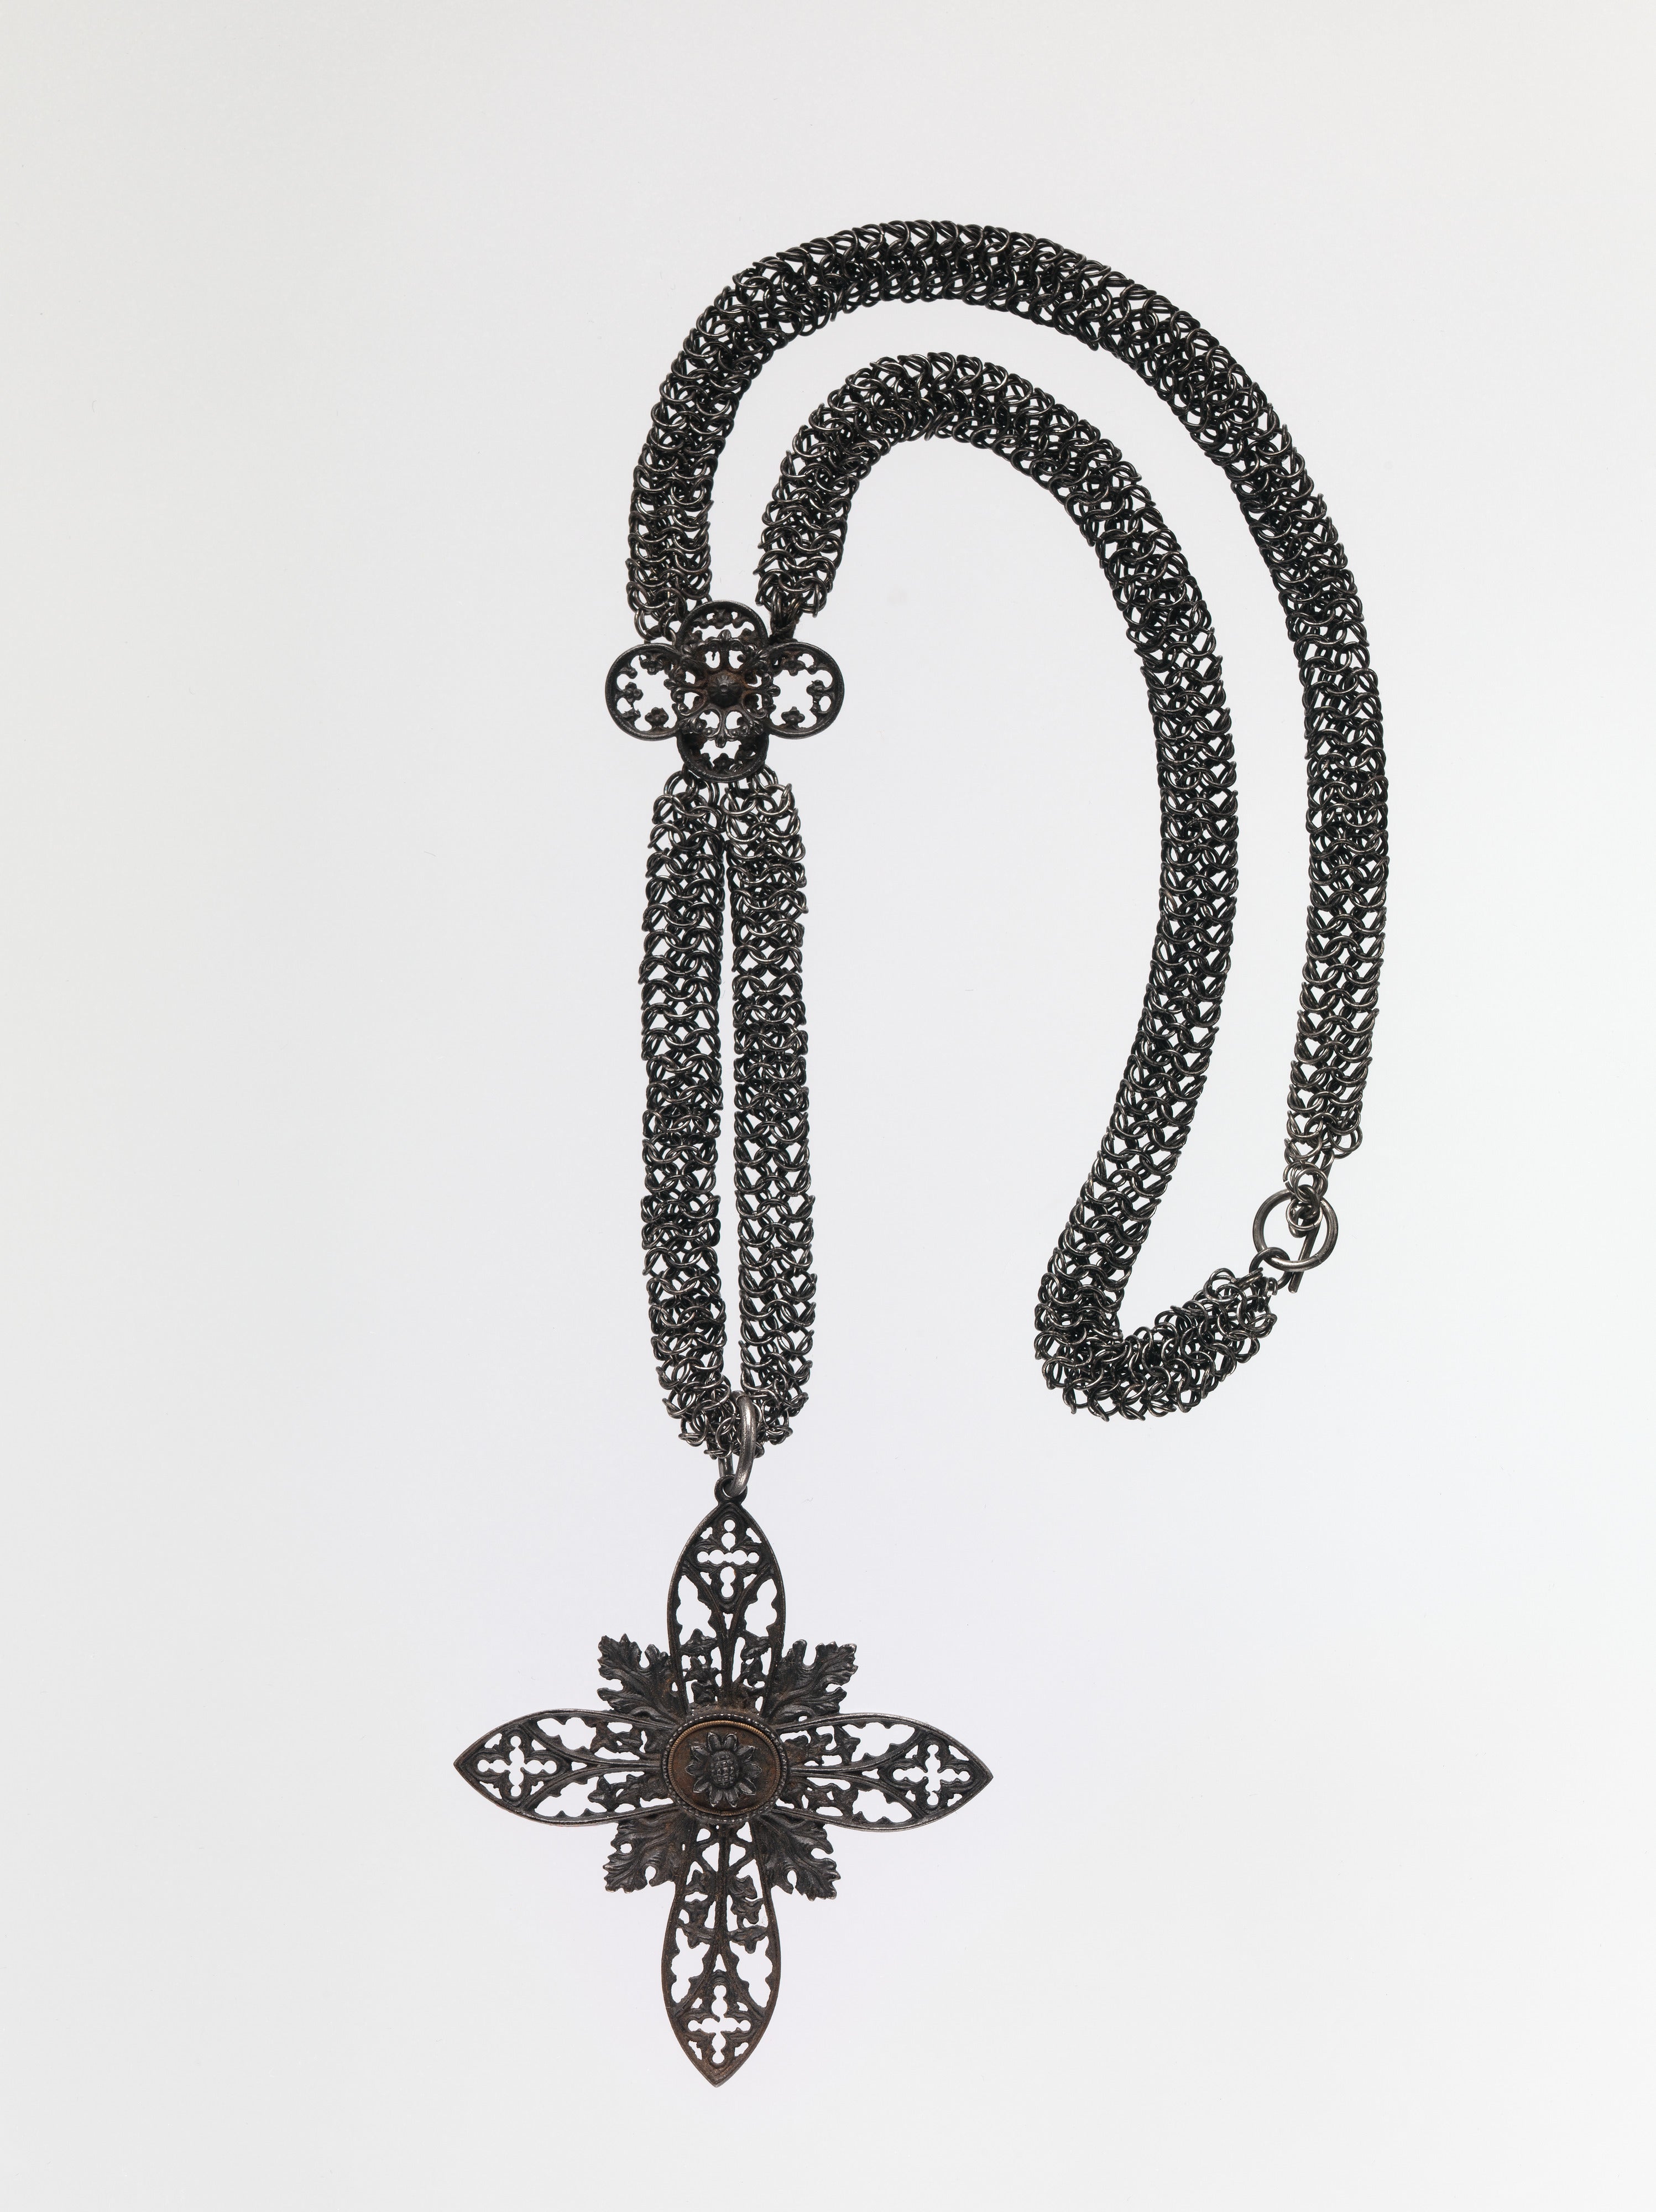 Berlin ironwork necklace with cross pendant